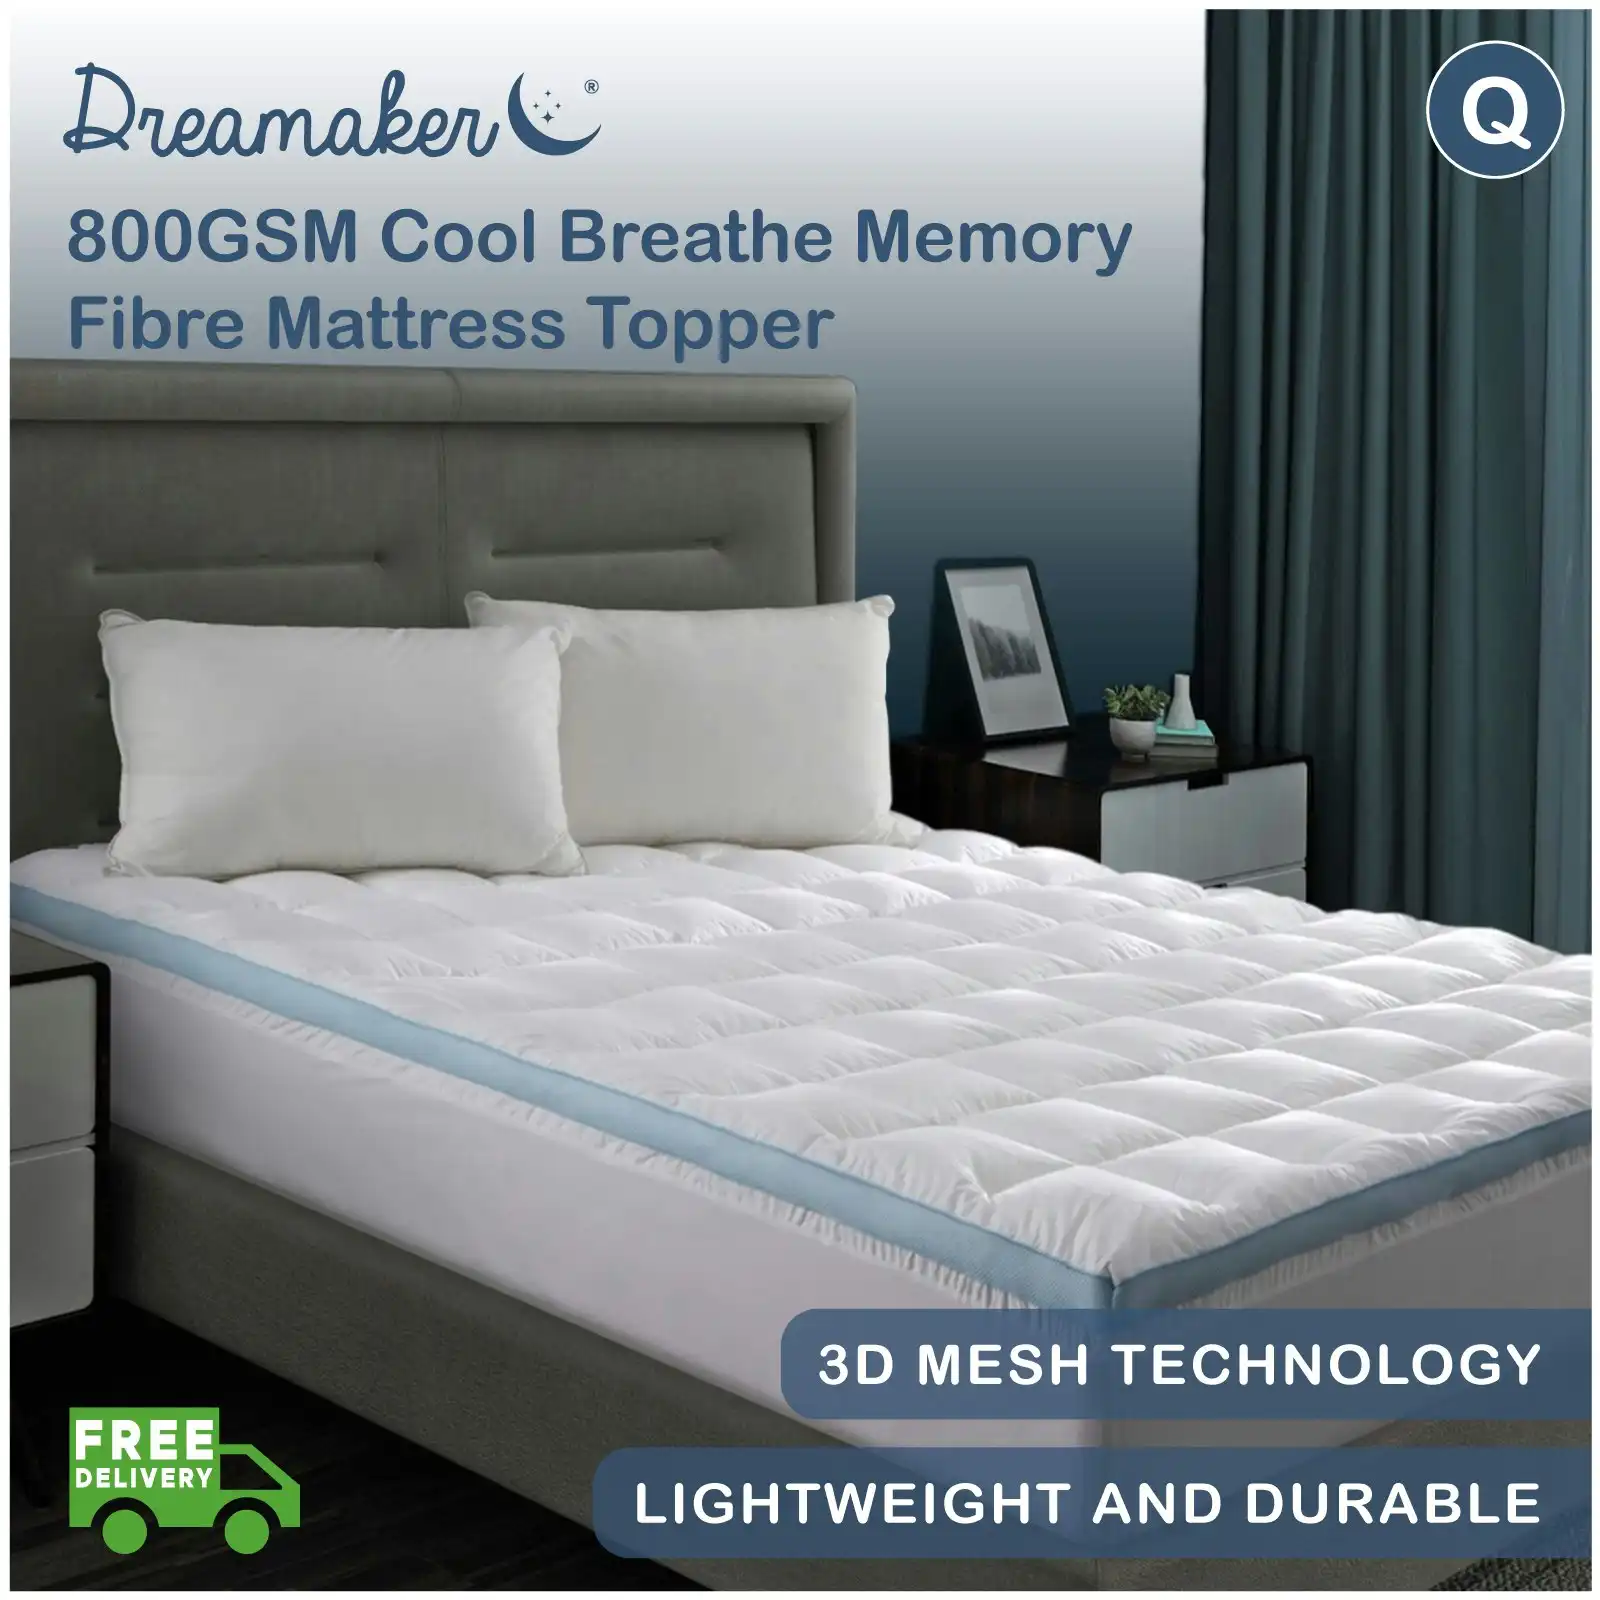 Dreamaker 800GSM Cool Breathe Memory Fibre Mattress Topper Queen Bed